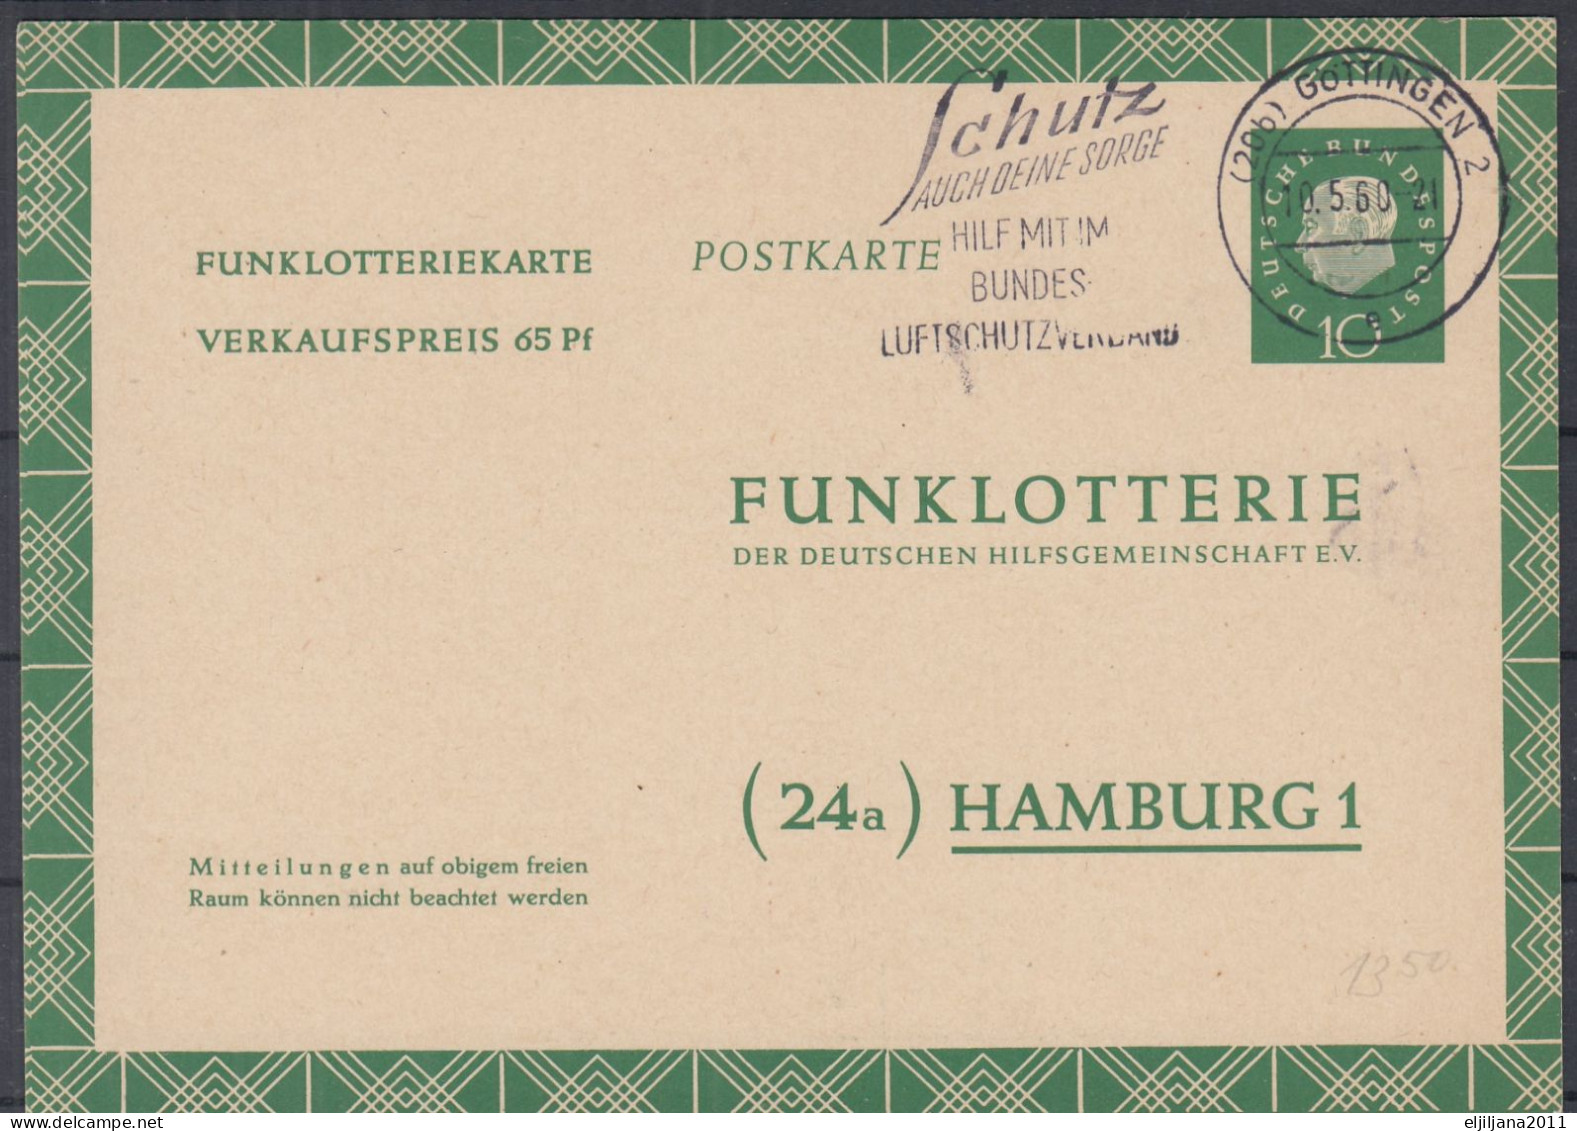 ⁕ Germany 1960 Deutsche BundesPost ⁕ FUNKLOTTERIE (24a) Hamburg 1 ⁕ Göttingen Postmark ⁕ Stationery Postcard - Postkaarten - Gebruikt